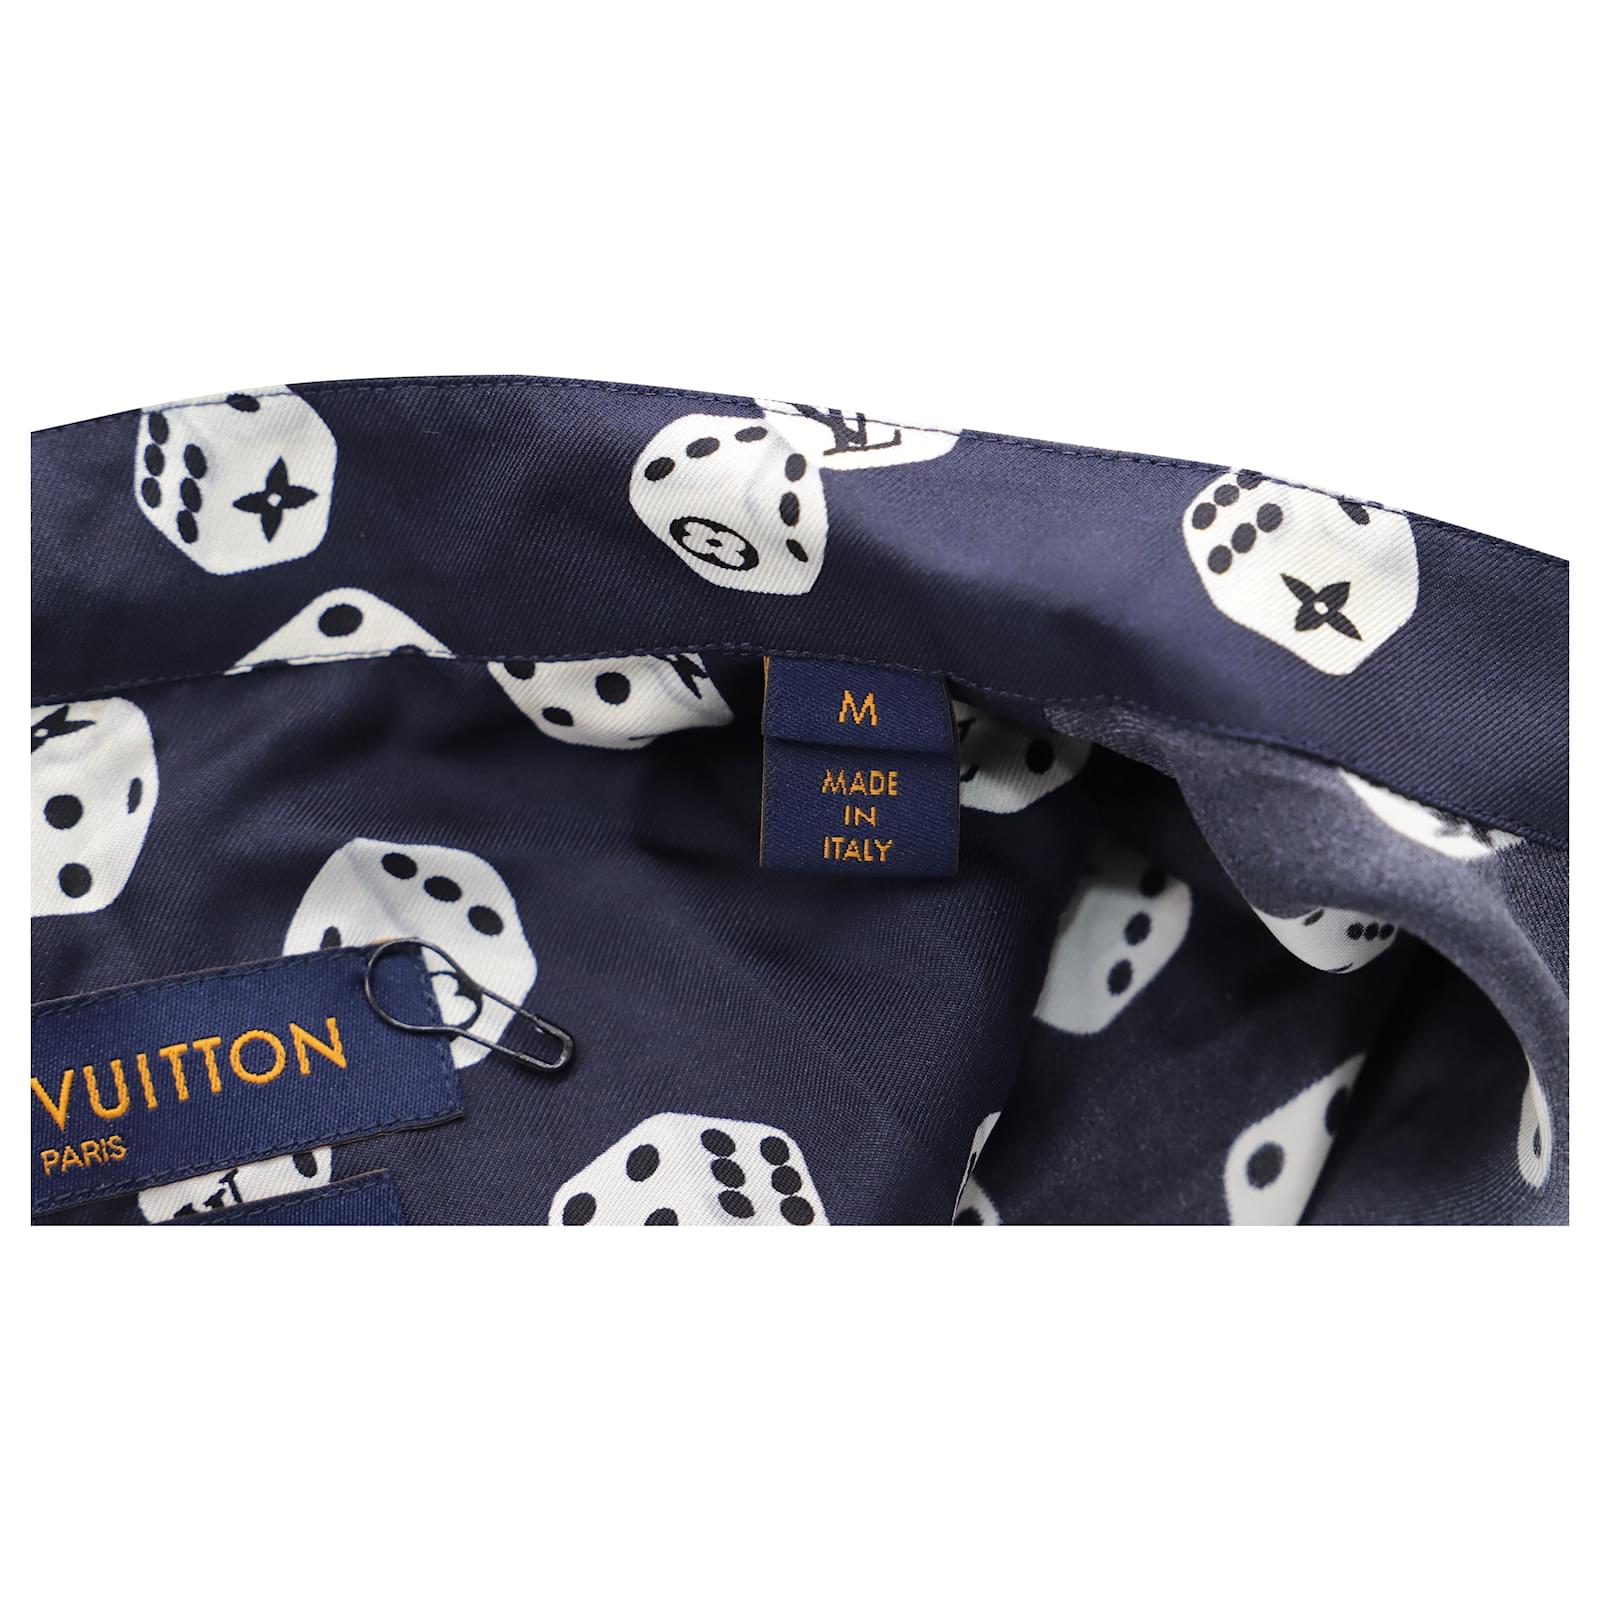 Louis Vuitton Silk Monogram Dice Print Shirt - Blue Casual Shirts